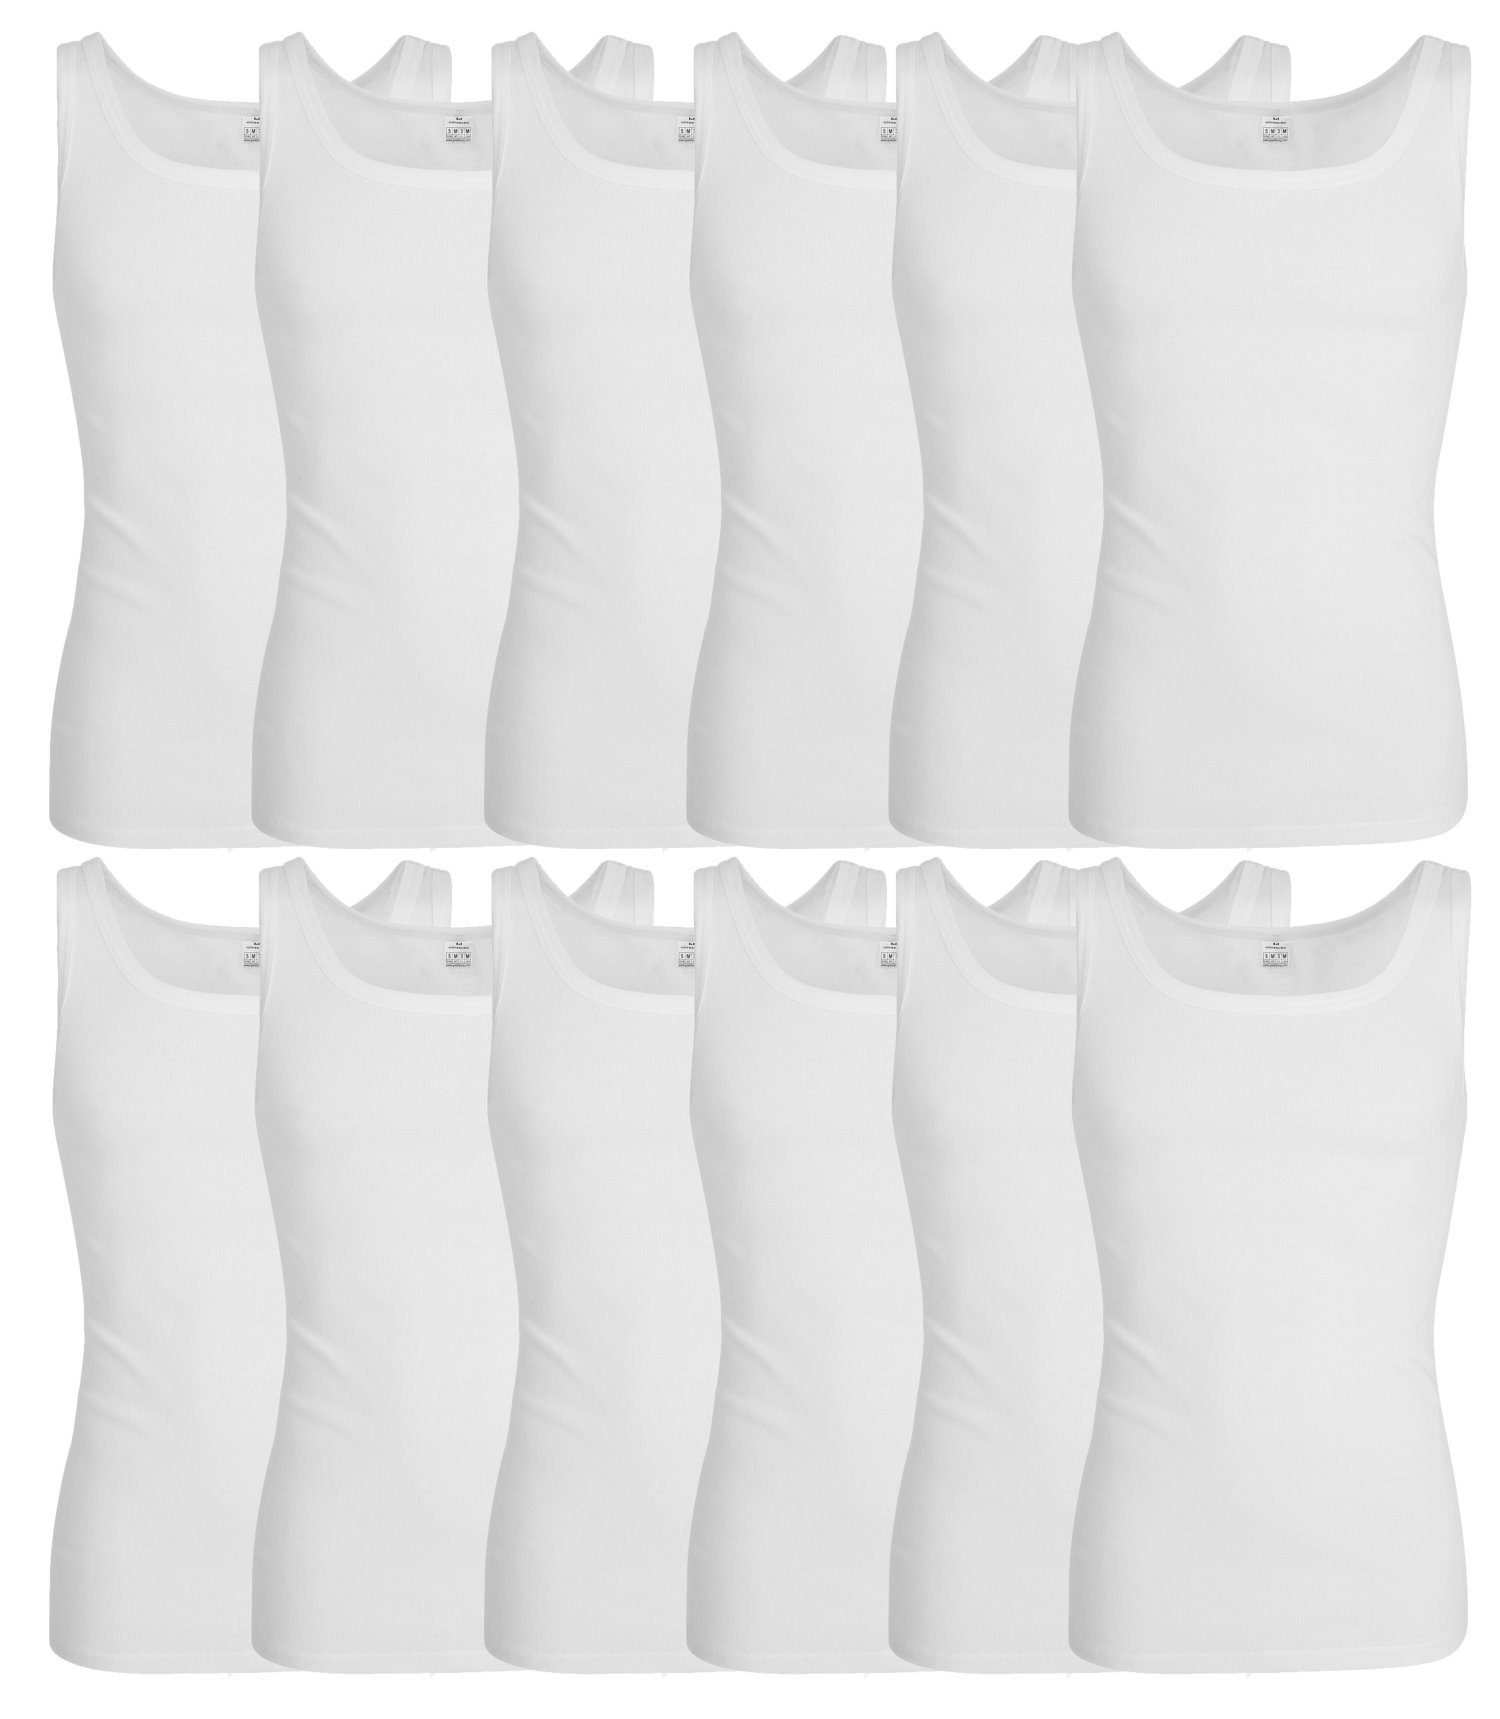 GÖTZBURG Unterhemd 12er Pack Herren Unterhemden (12-St) Feinripp Baumwolle | Ärmellose Unterhemden